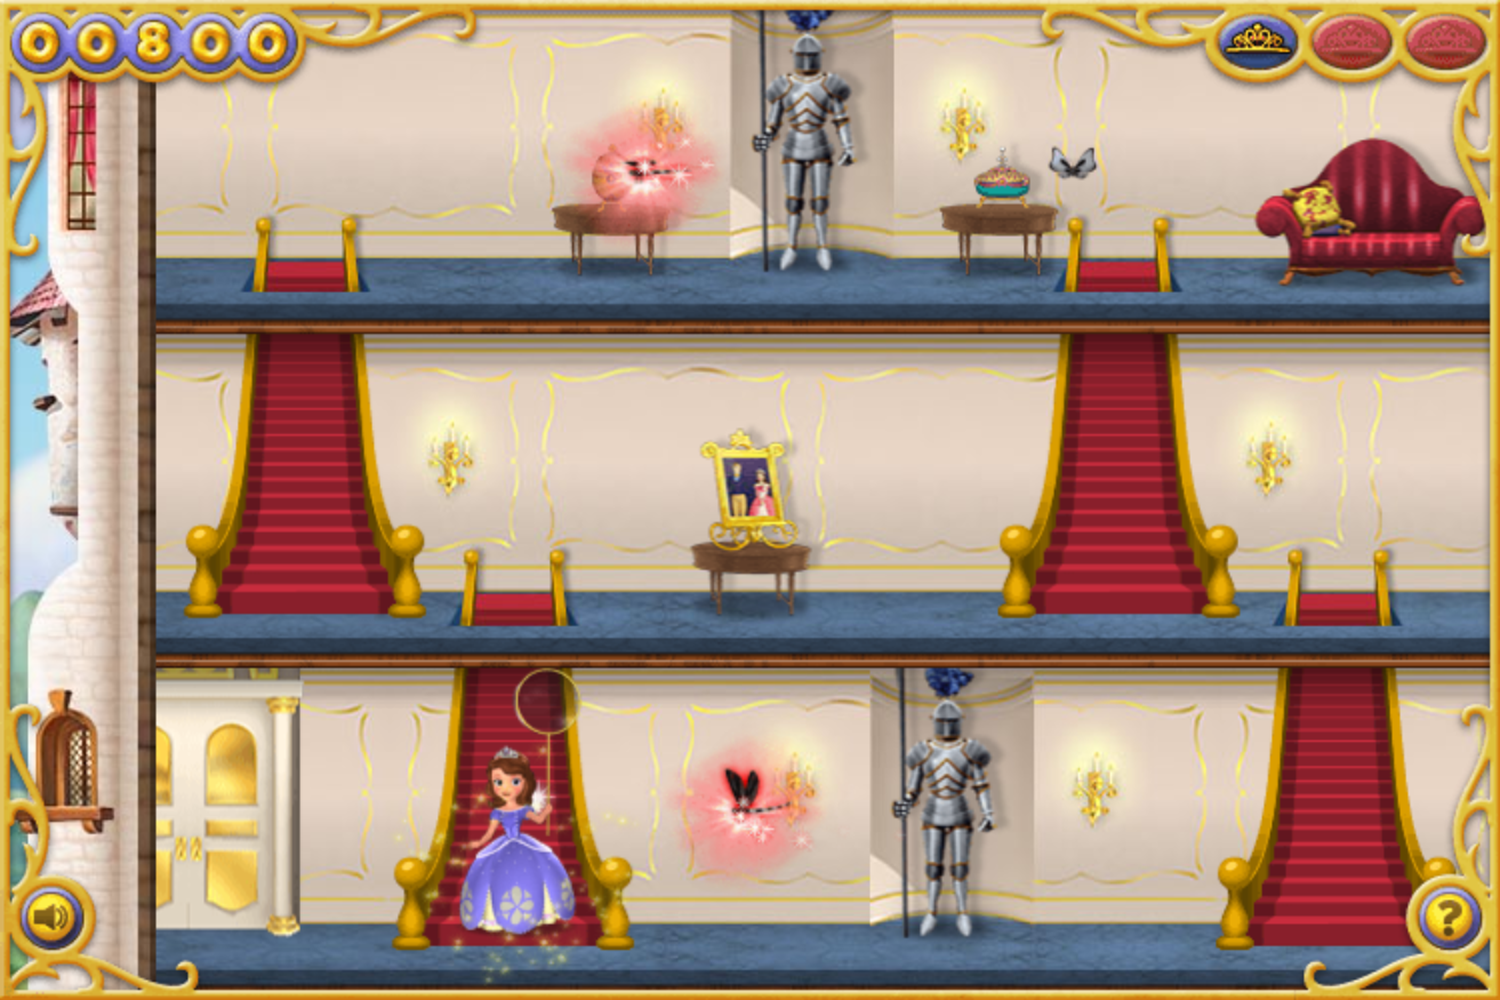 Sofia the First Curse of Princess Ivy Game Play Screenshot.